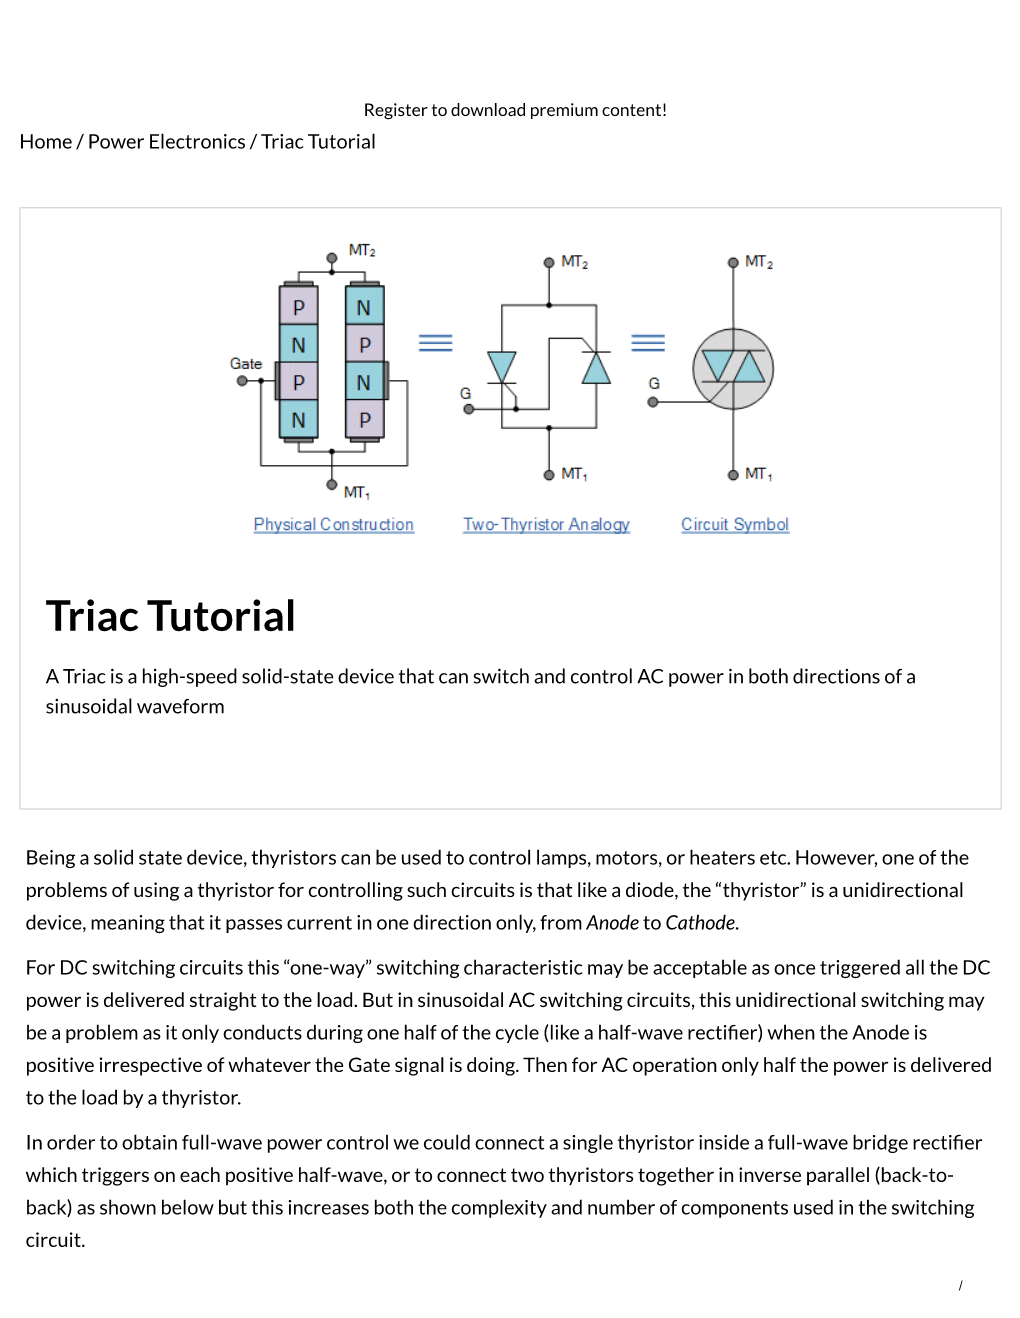 ELEC-SPD-S5-Triac Tutorial and Triac Switching Circuits.Pdf